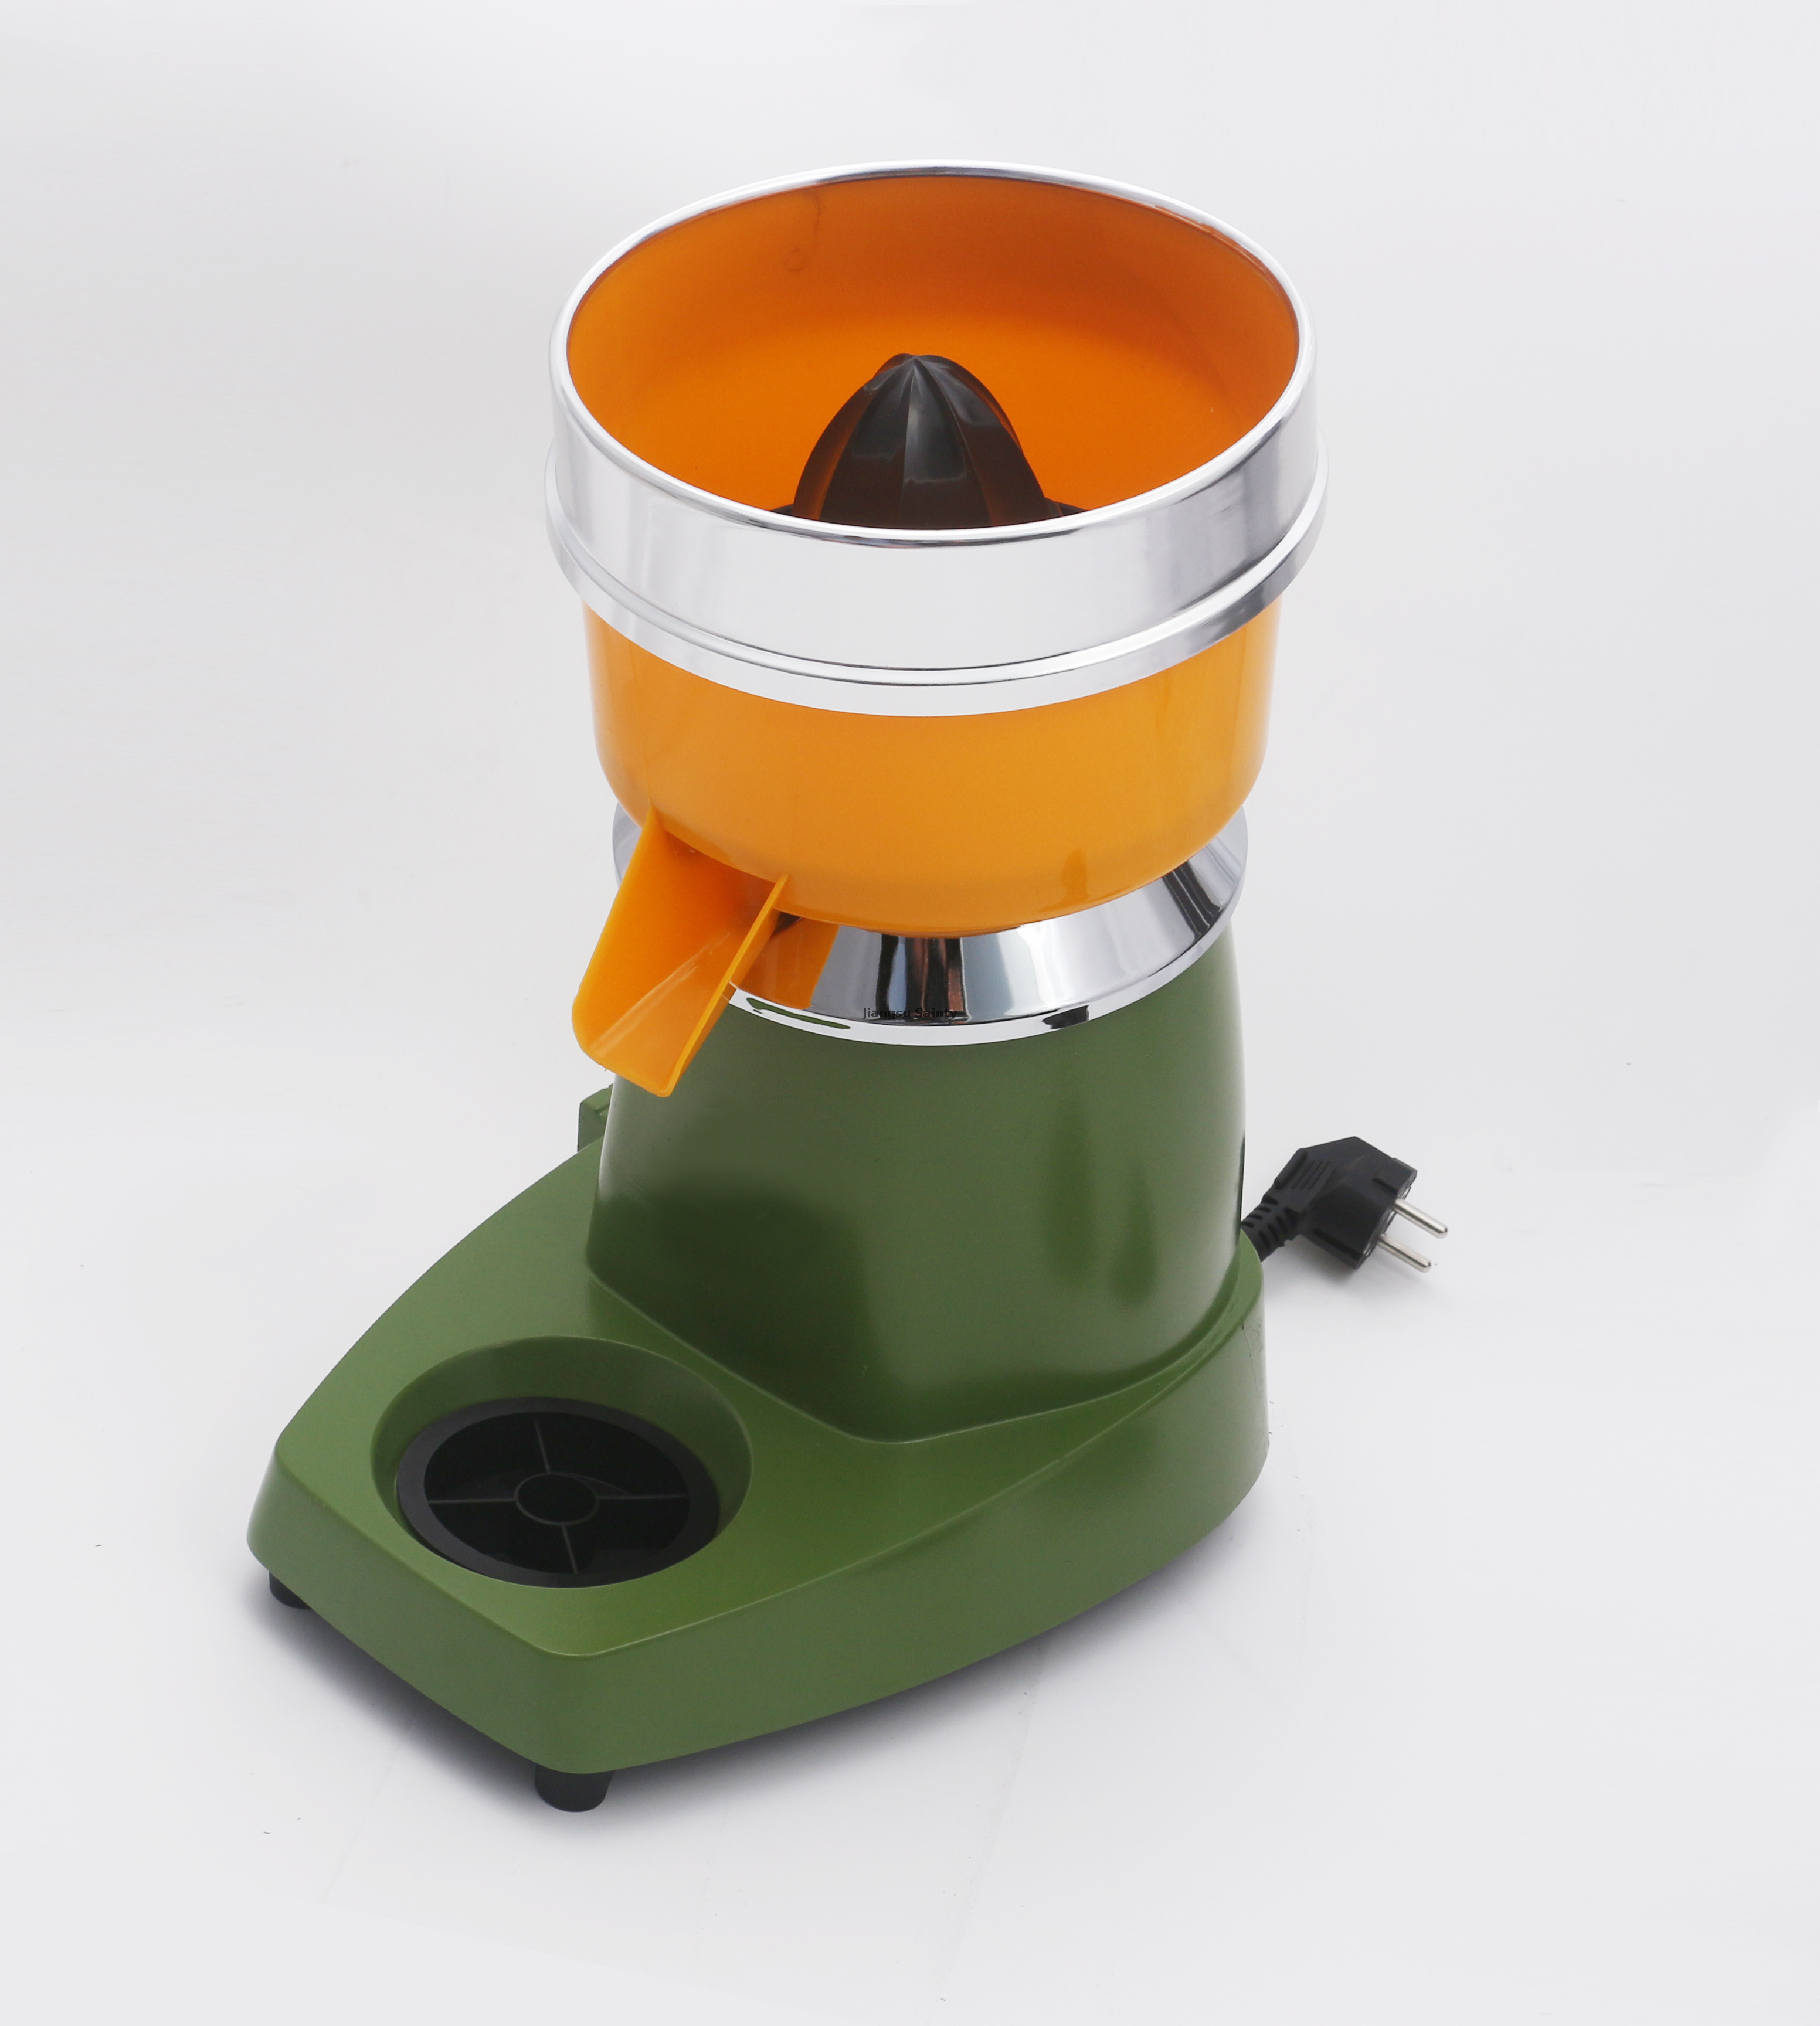 fruit ISO9001 Orange Juicer with filter